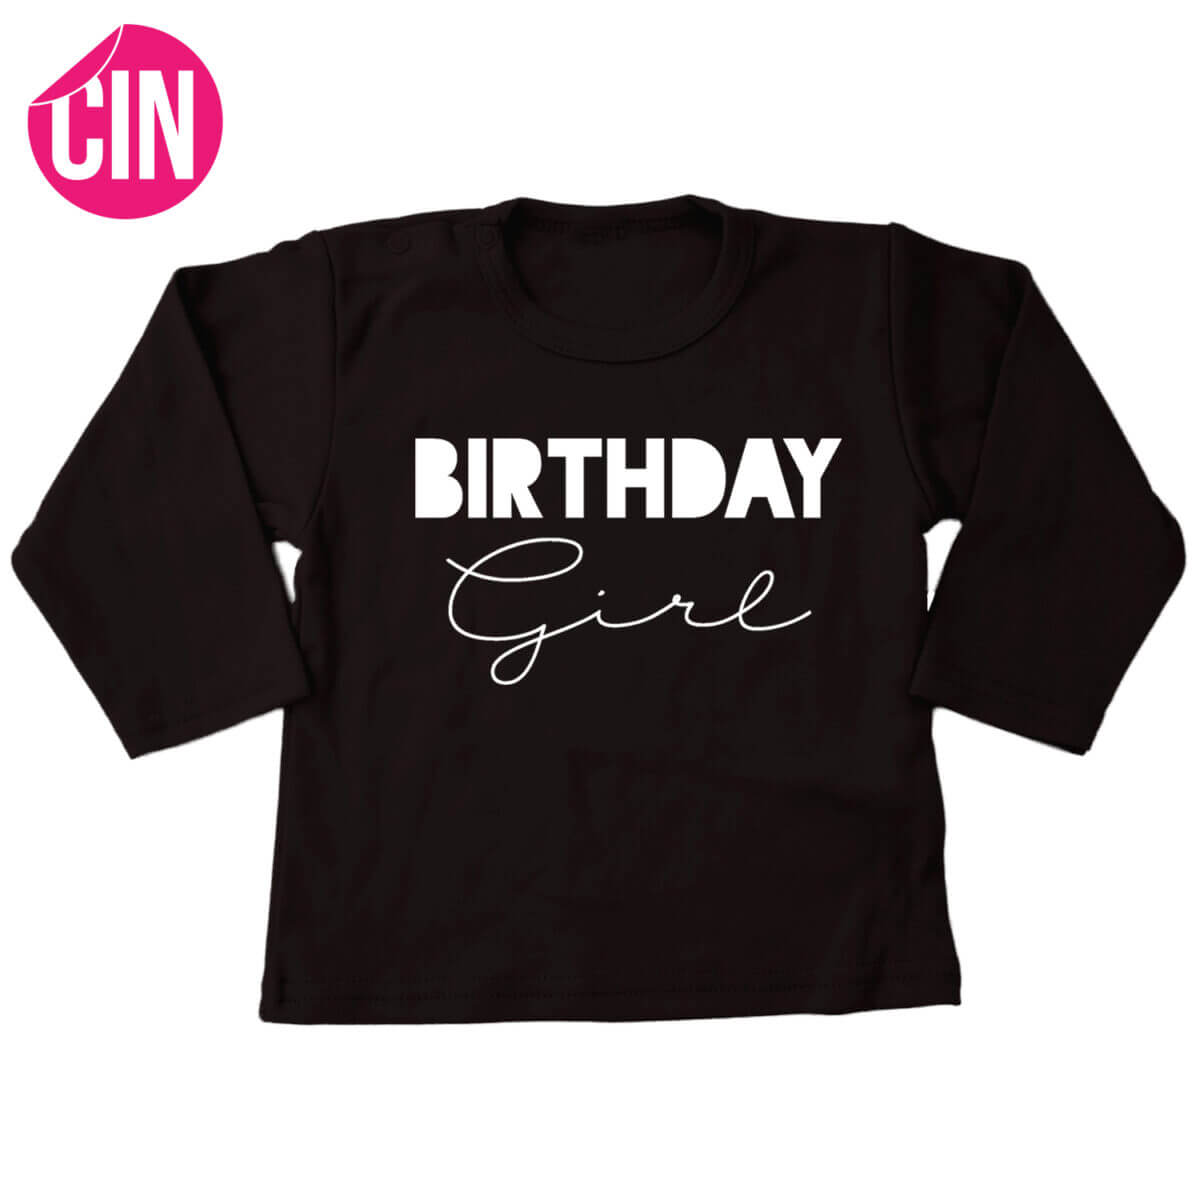 birthday girl t-shirt lange mouw zwart cindysigns